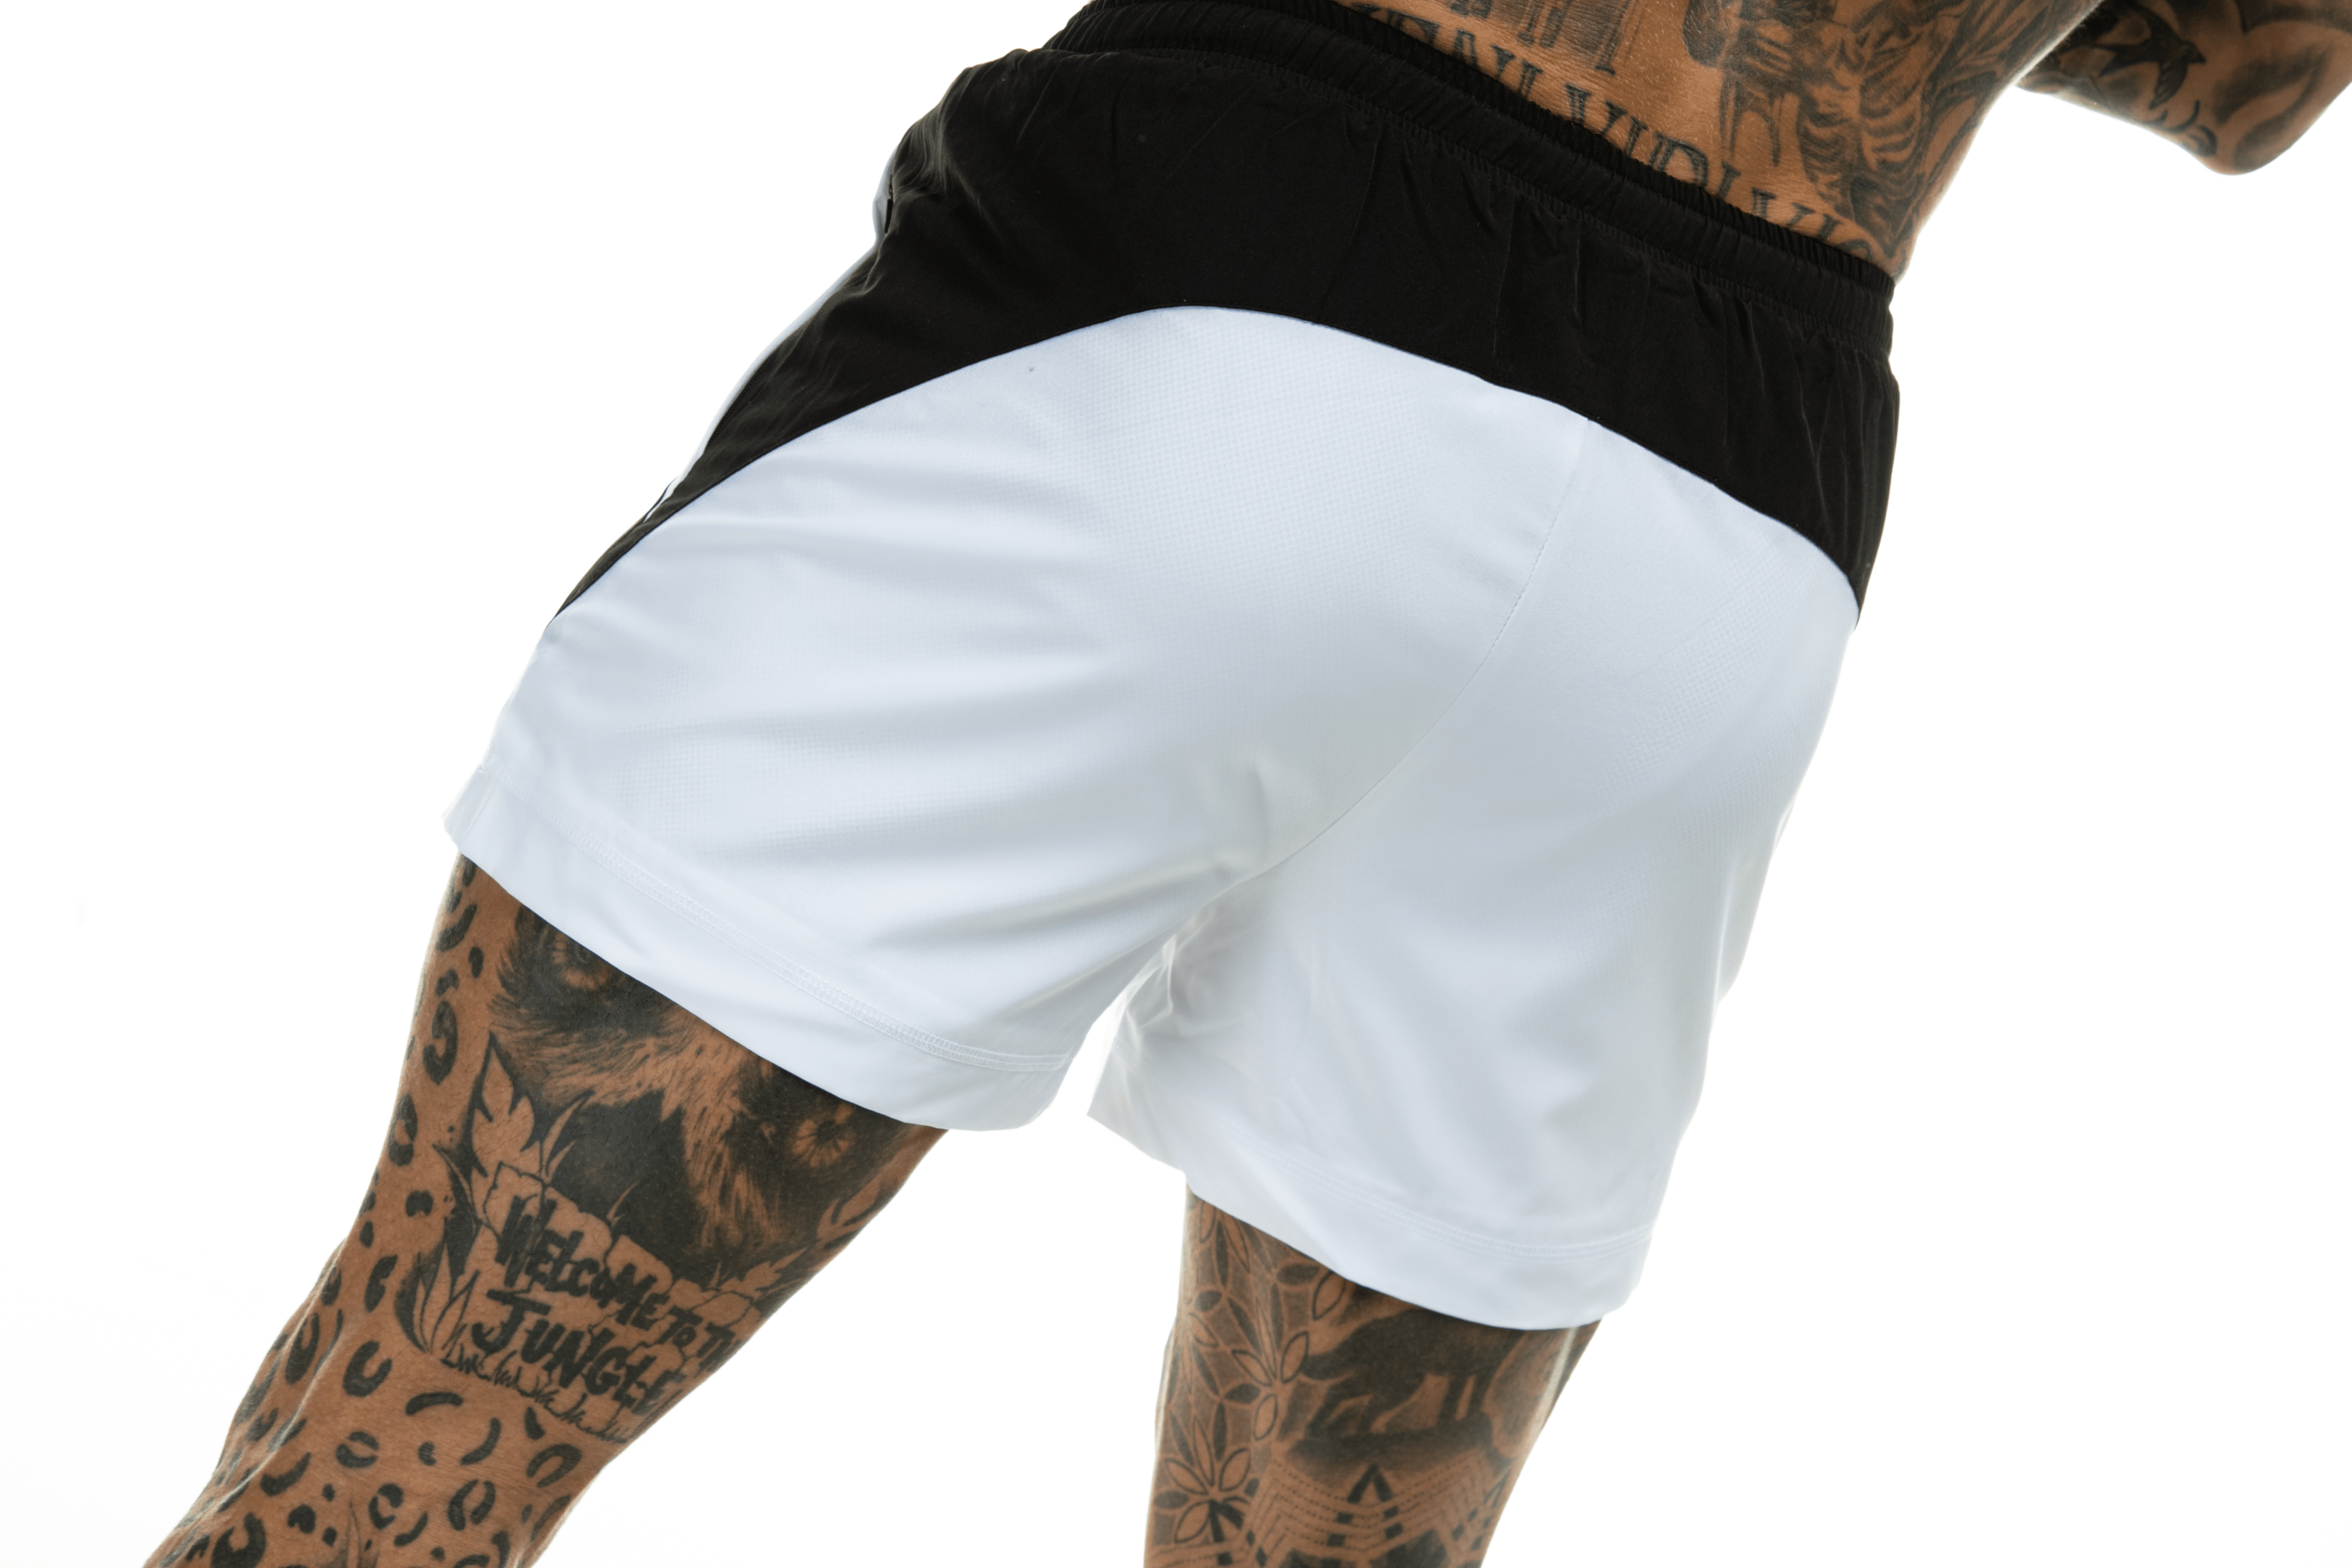 GymFreak Mens Pro Shorts - White - 3.5 inch